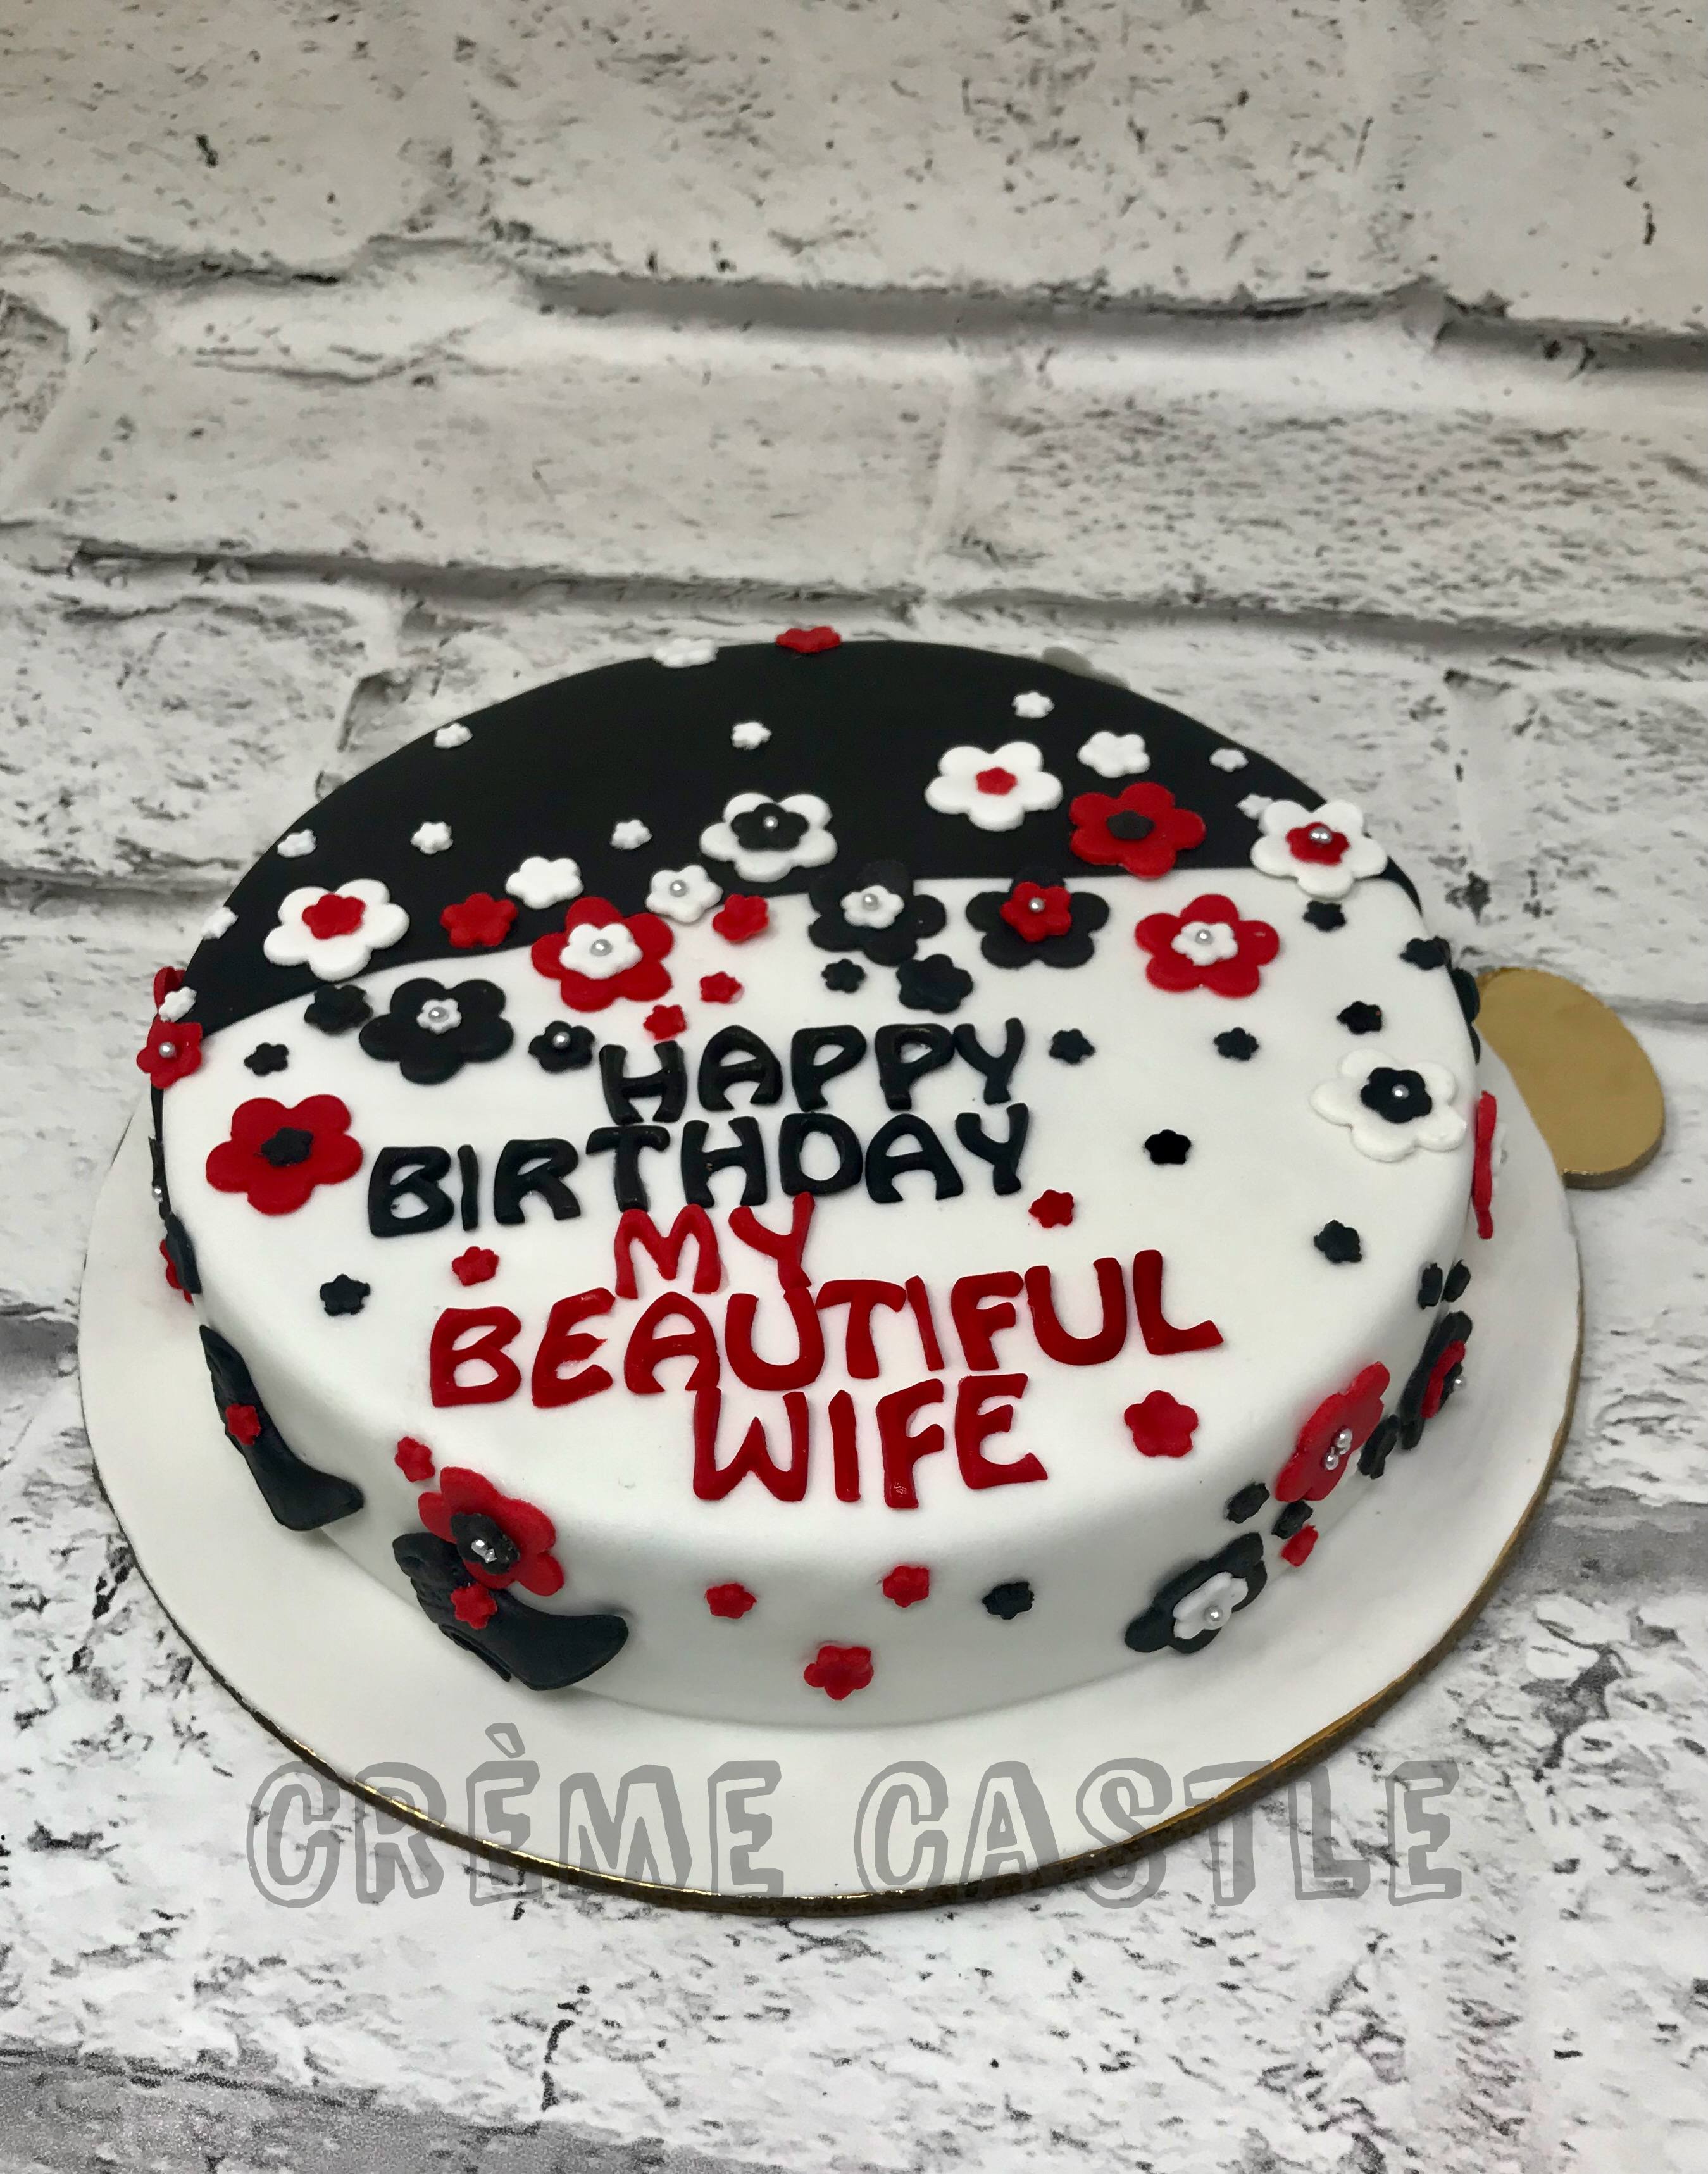 Birthday cake ideas for wife. Online birthday cake wife,custom cake for wife